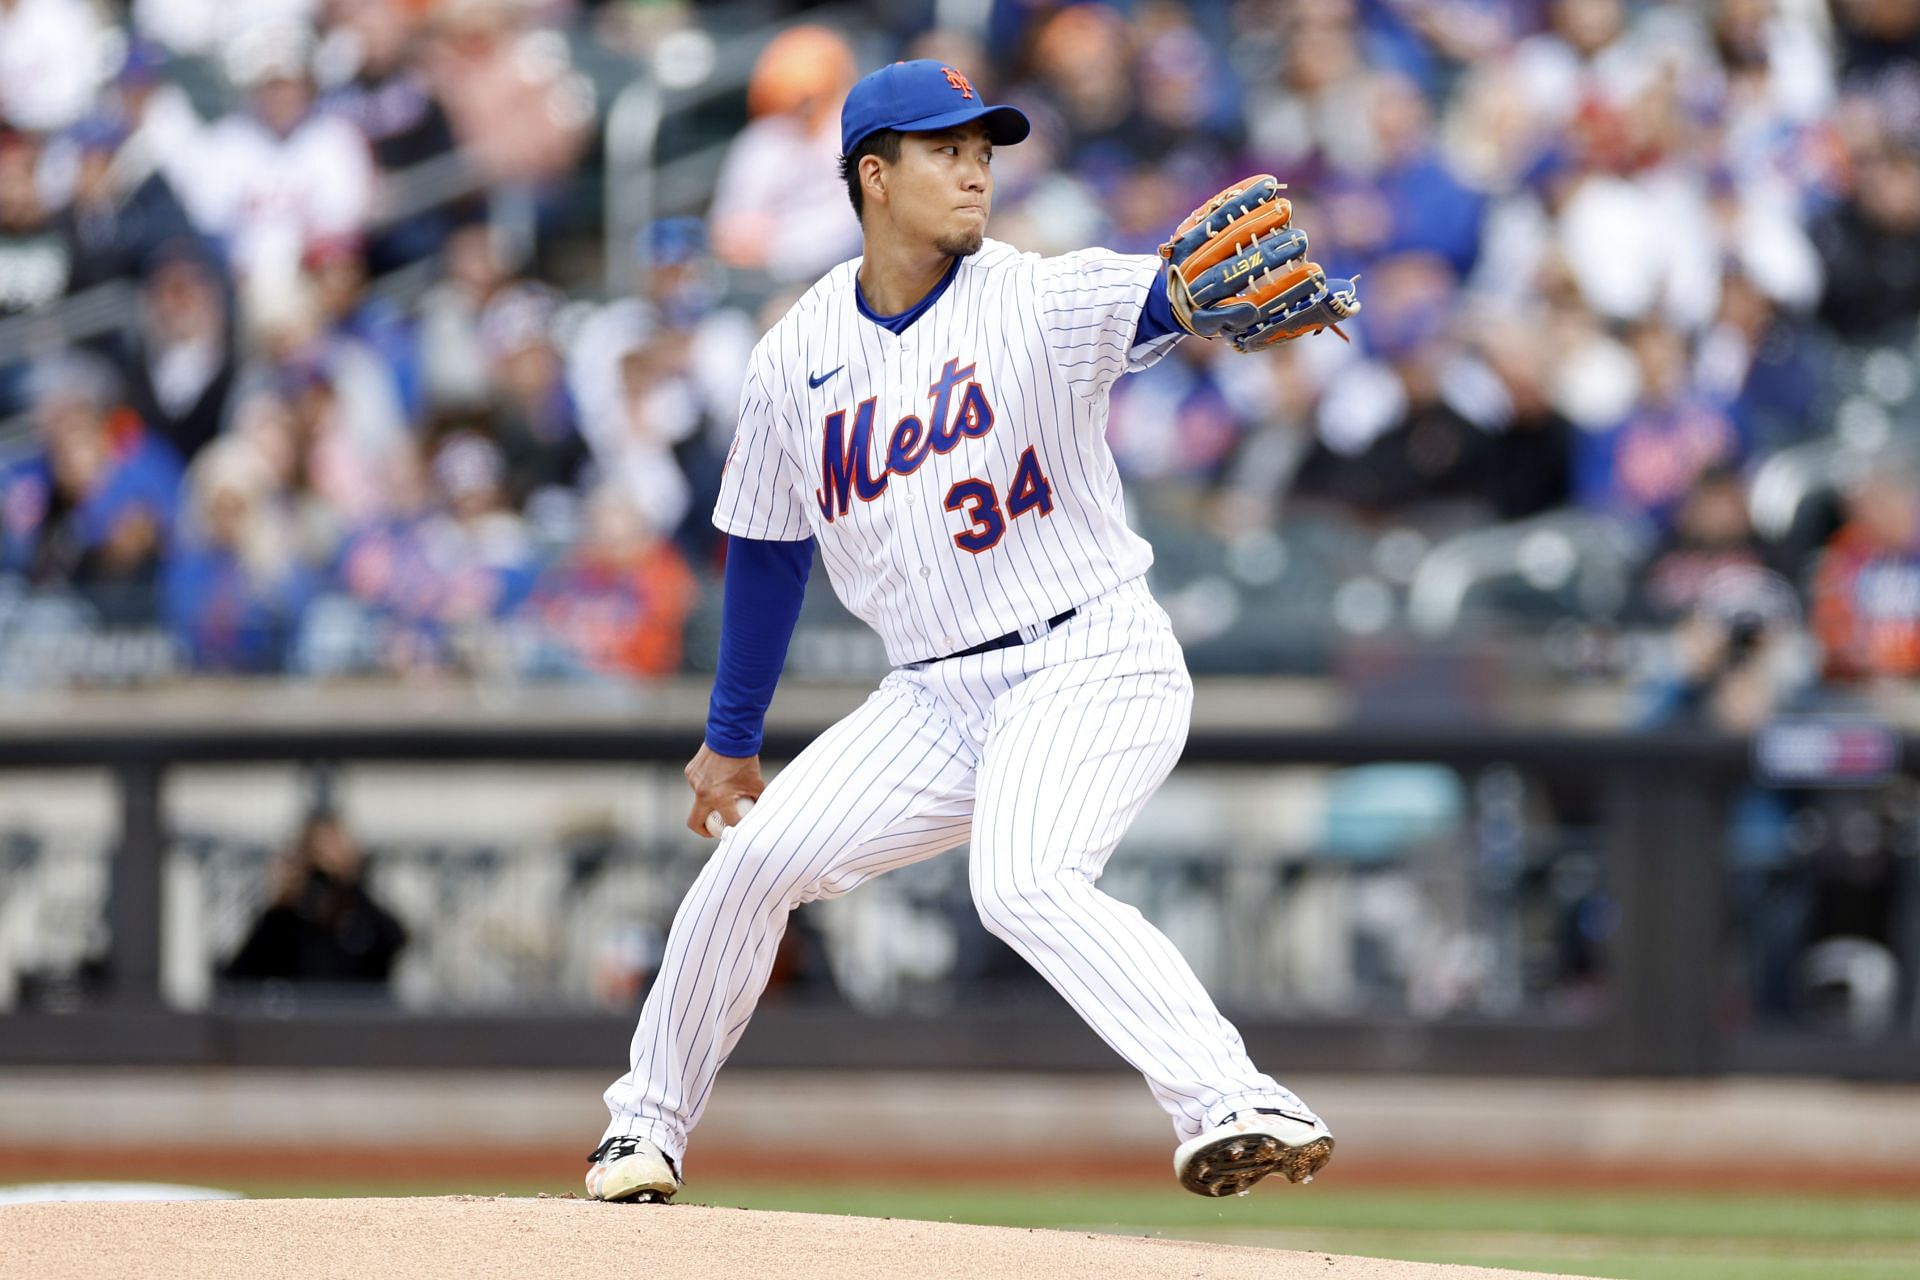 Mets' Kodai Senga wears ghost glove, dazzles in MLB debut - ABC7 New York